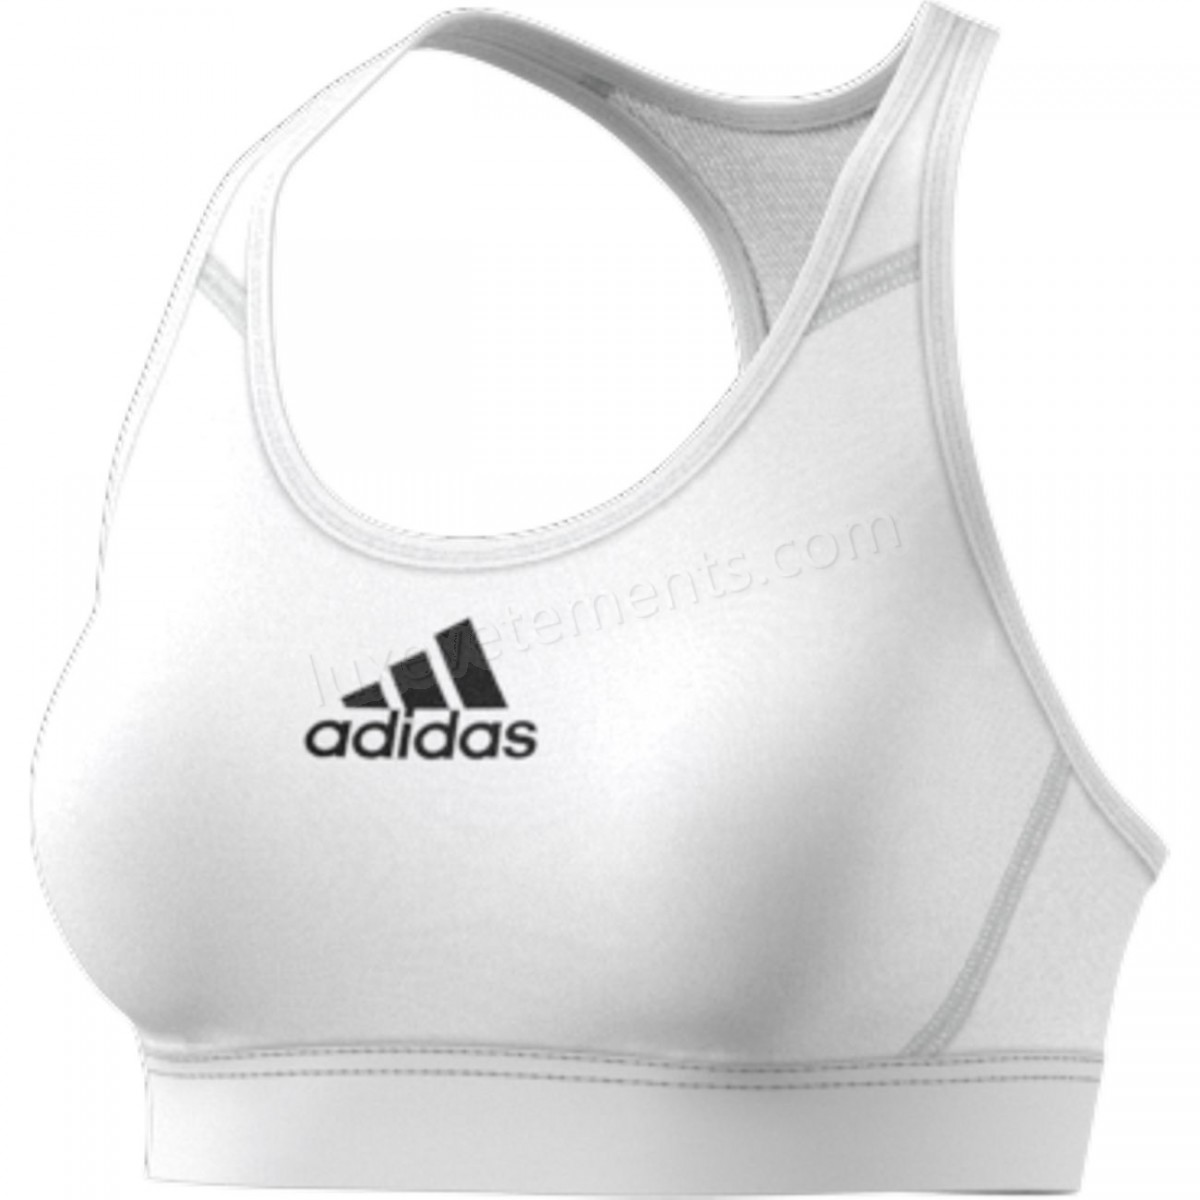 Adidas-Fitness femme ADIDAS Brassière adidas Don't Rest Alphaskin Vente en ligne - -24